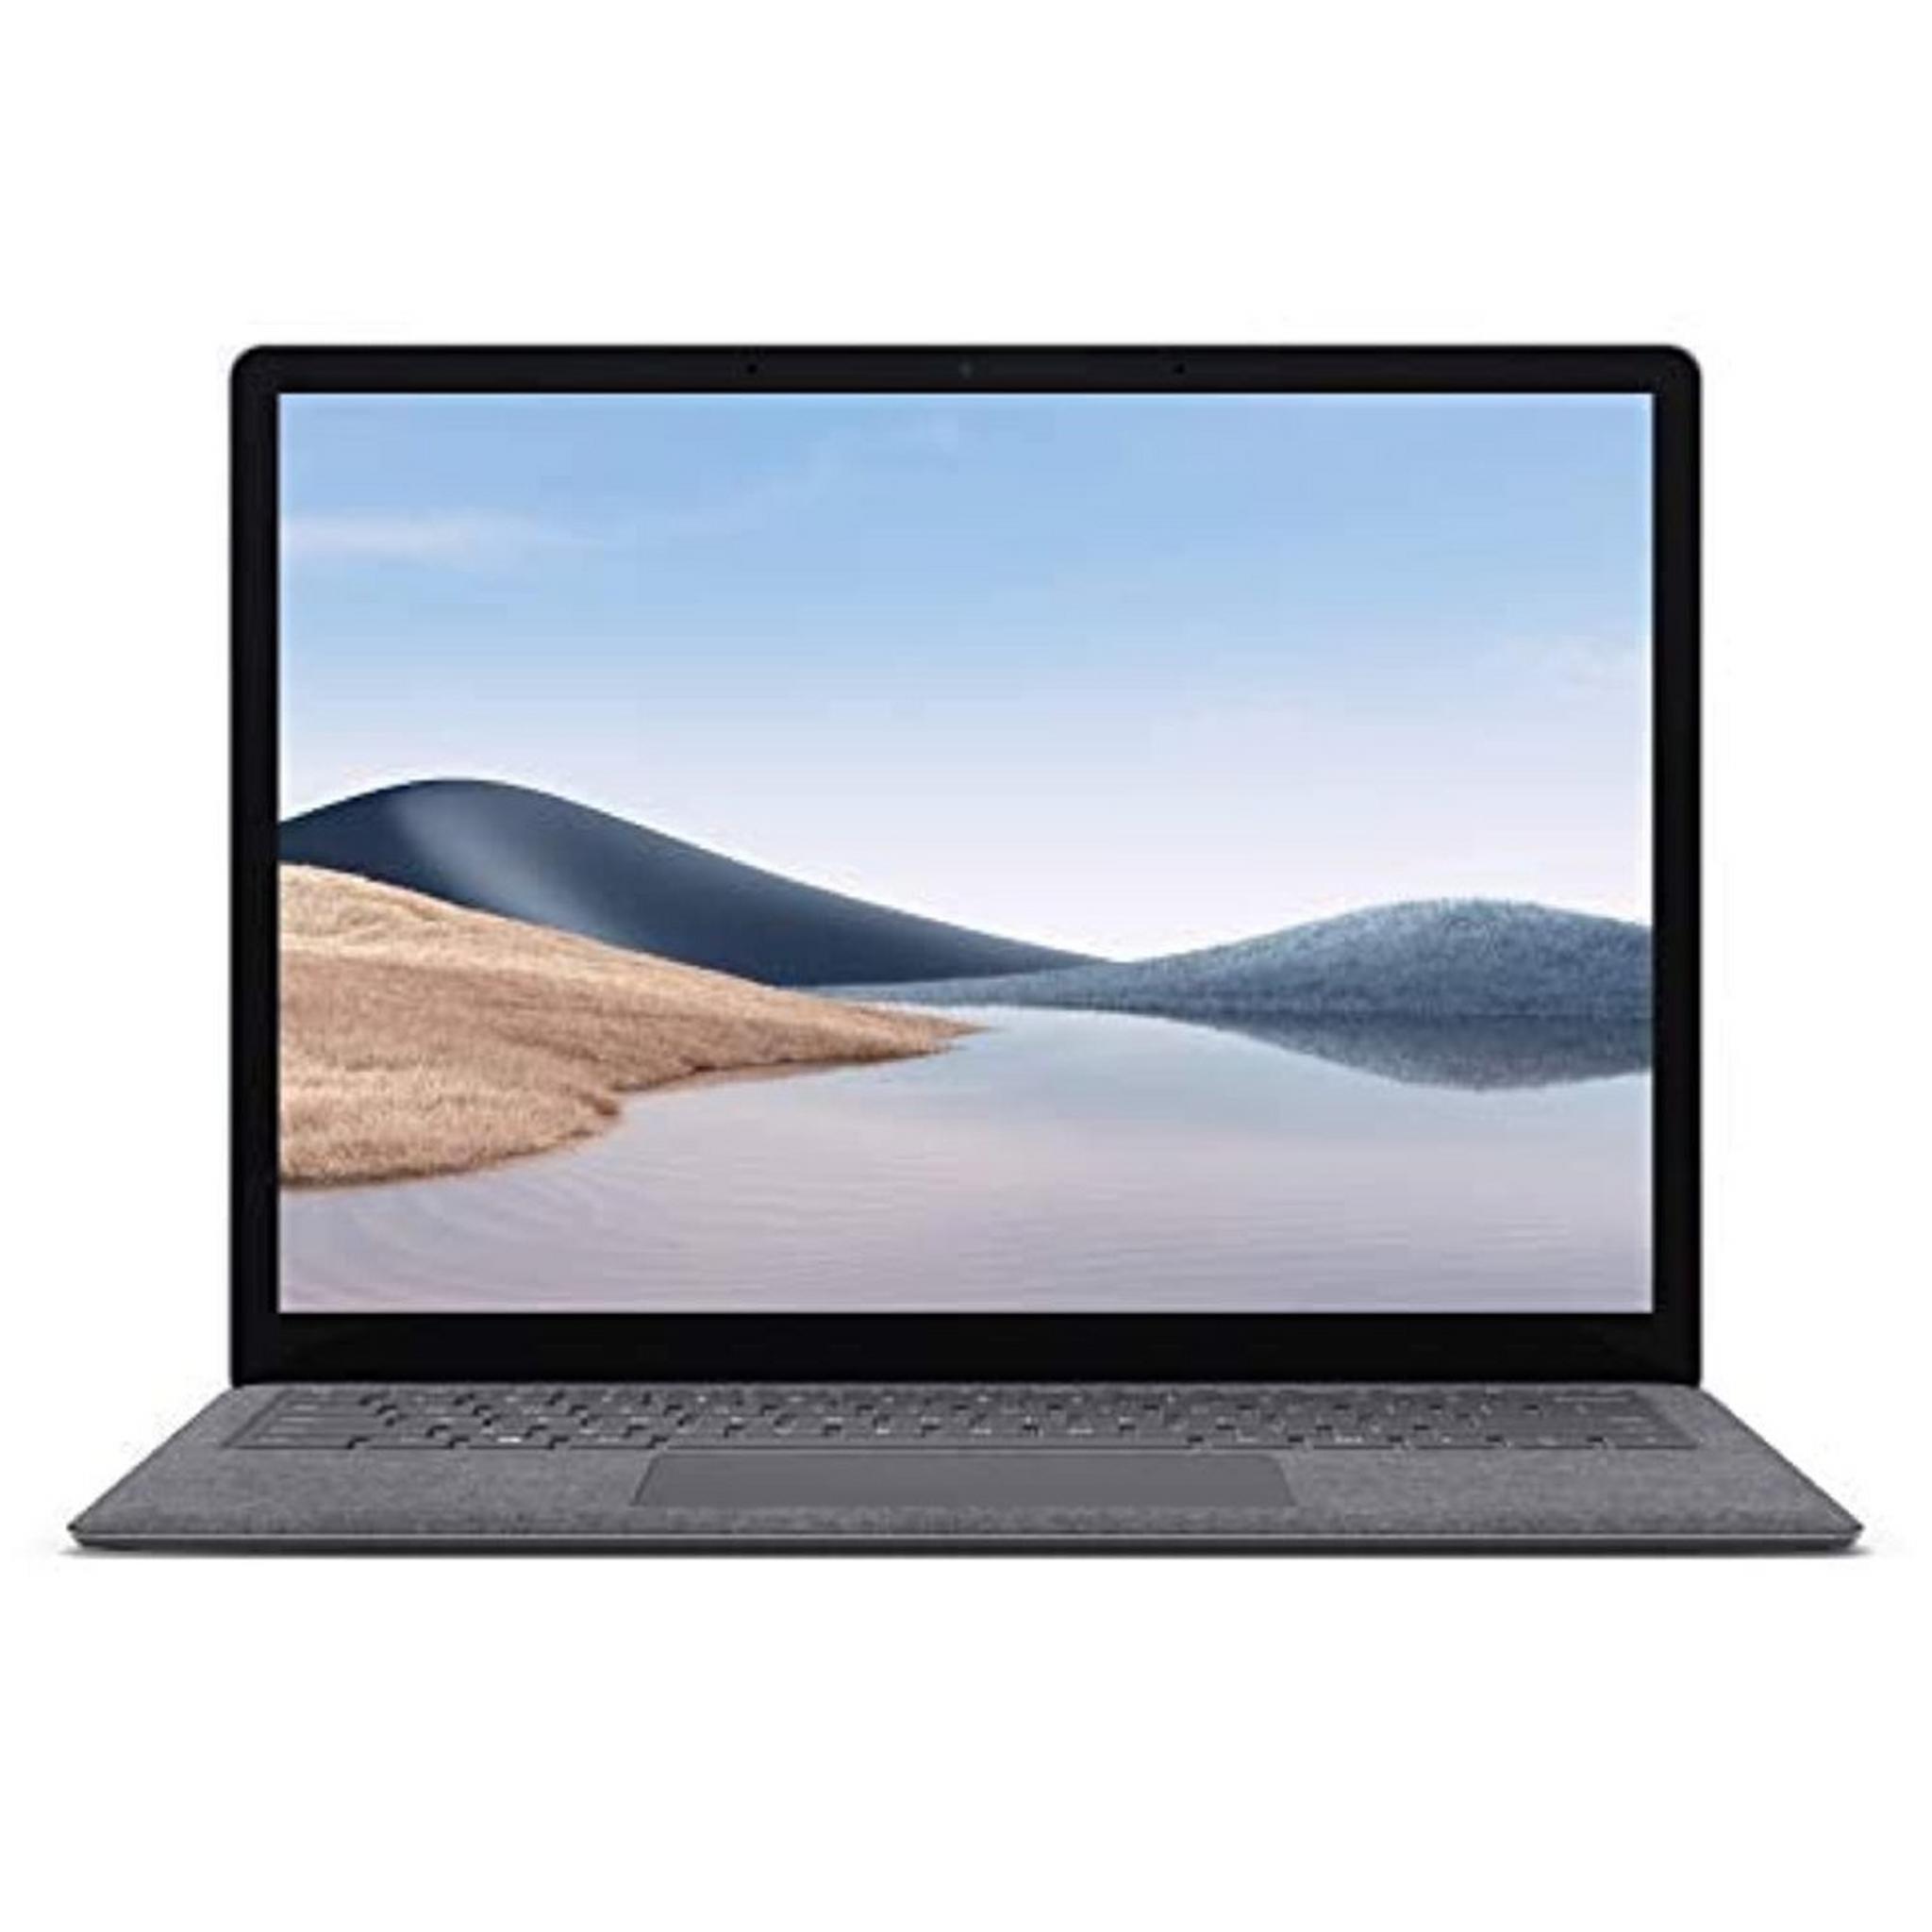 Microsoft Surface Laptop 4 Intel Core i7 11th Gen, 16GB RAM, 512GB SSD, 13.5-inch touch screen, Intel graphics Iris Xe, 5EB-00126 - Platinum